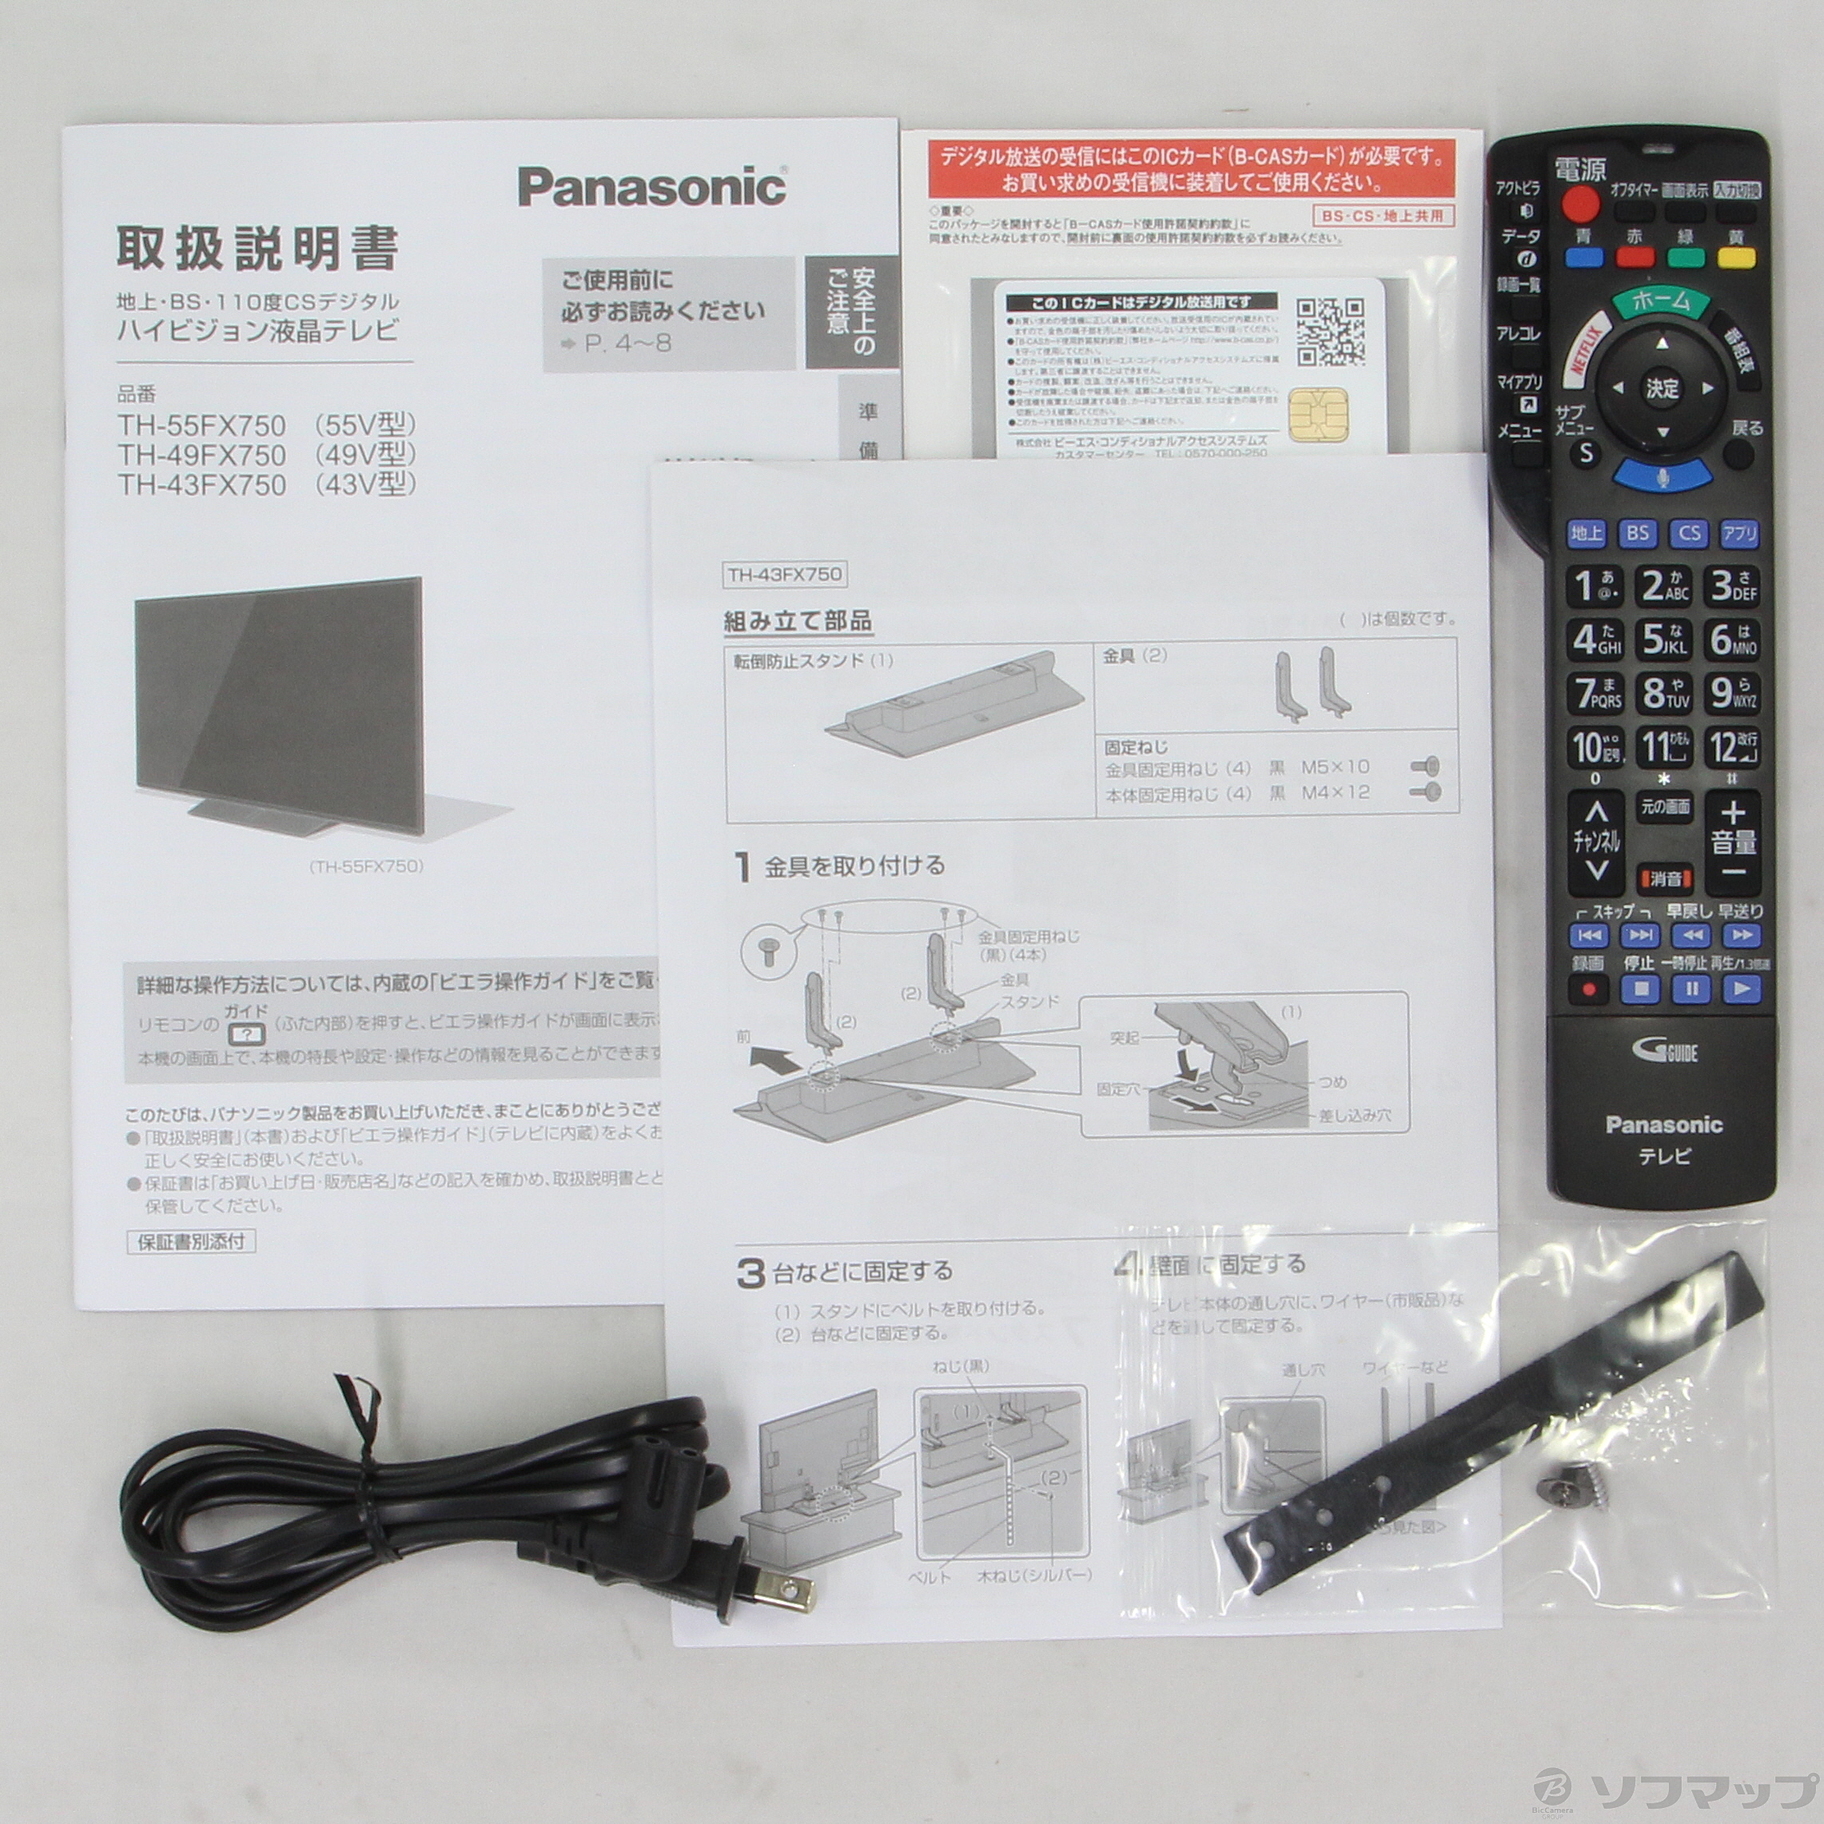 Panasonic VIERA TH-43FX750 スタンド - 映像機器